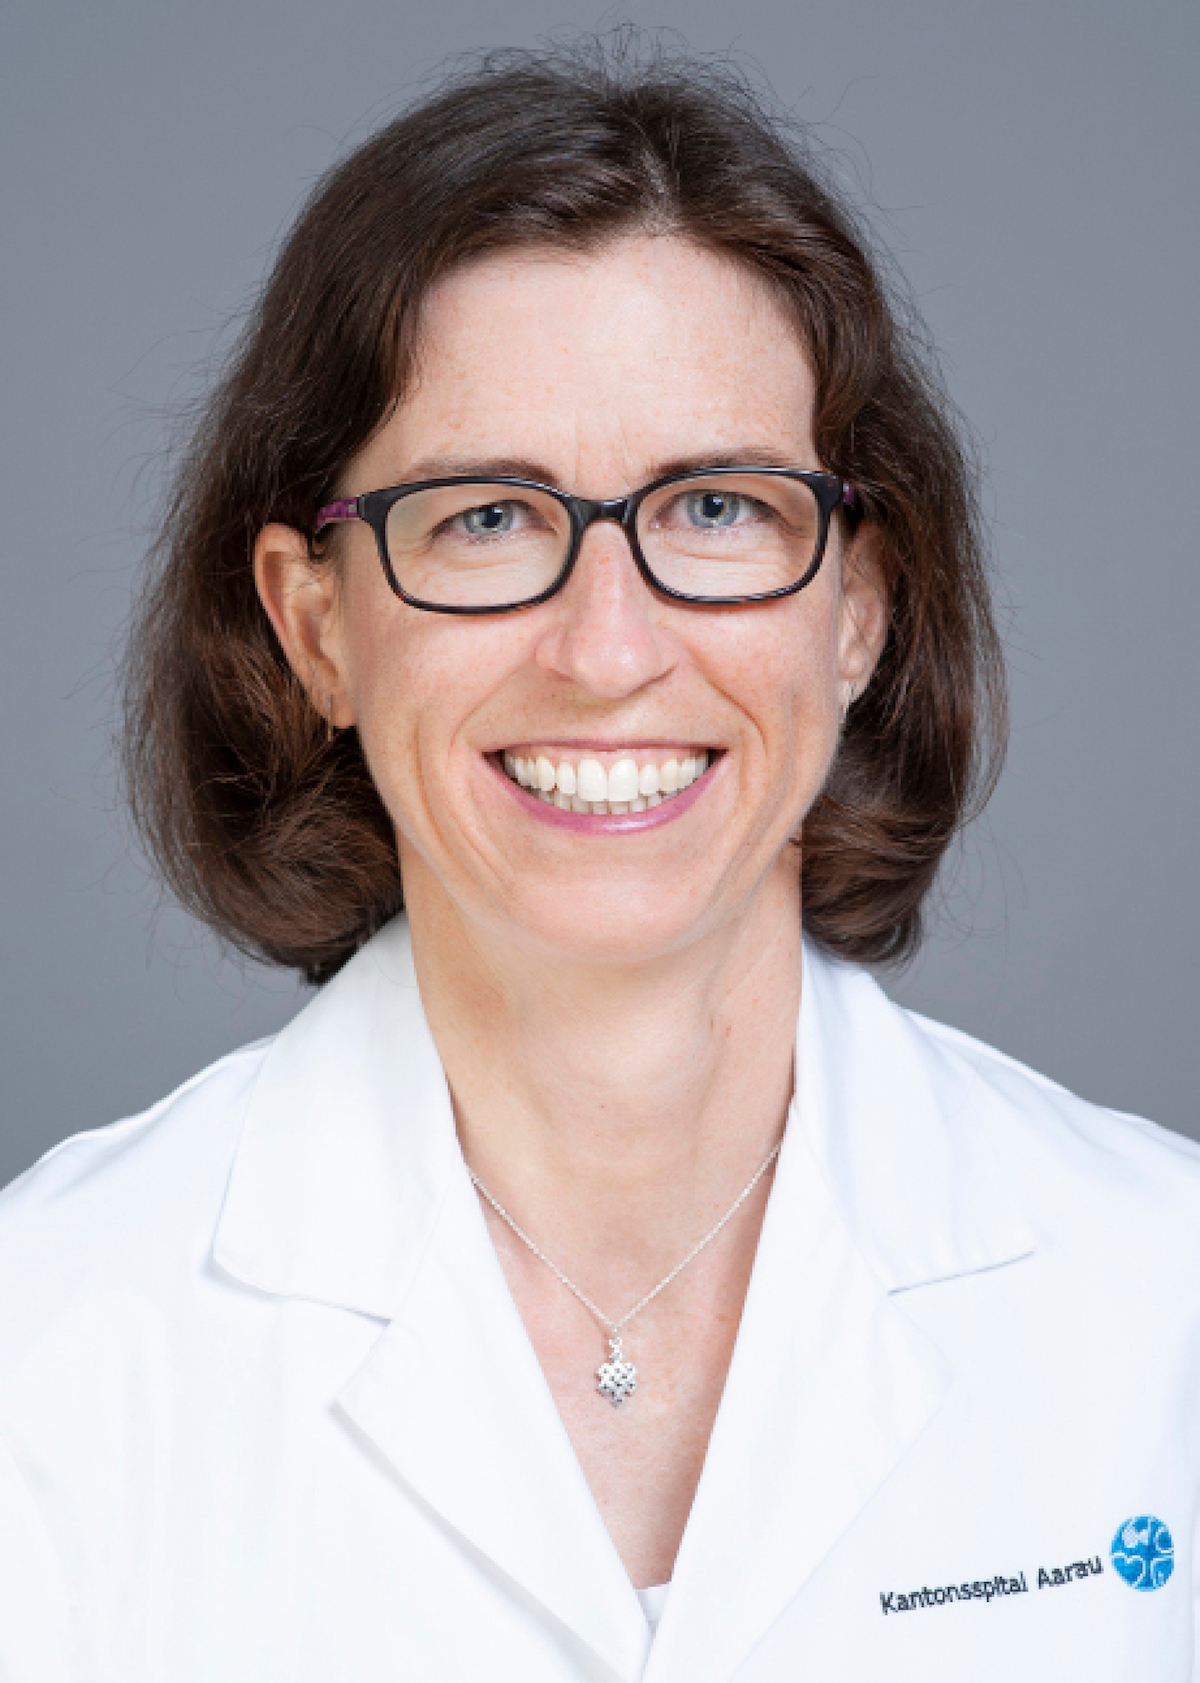 PD Dr. med. Sabine Gerull, Deputy Chief Physician at KSA, Head of Haematology and Transfusion Medicine.